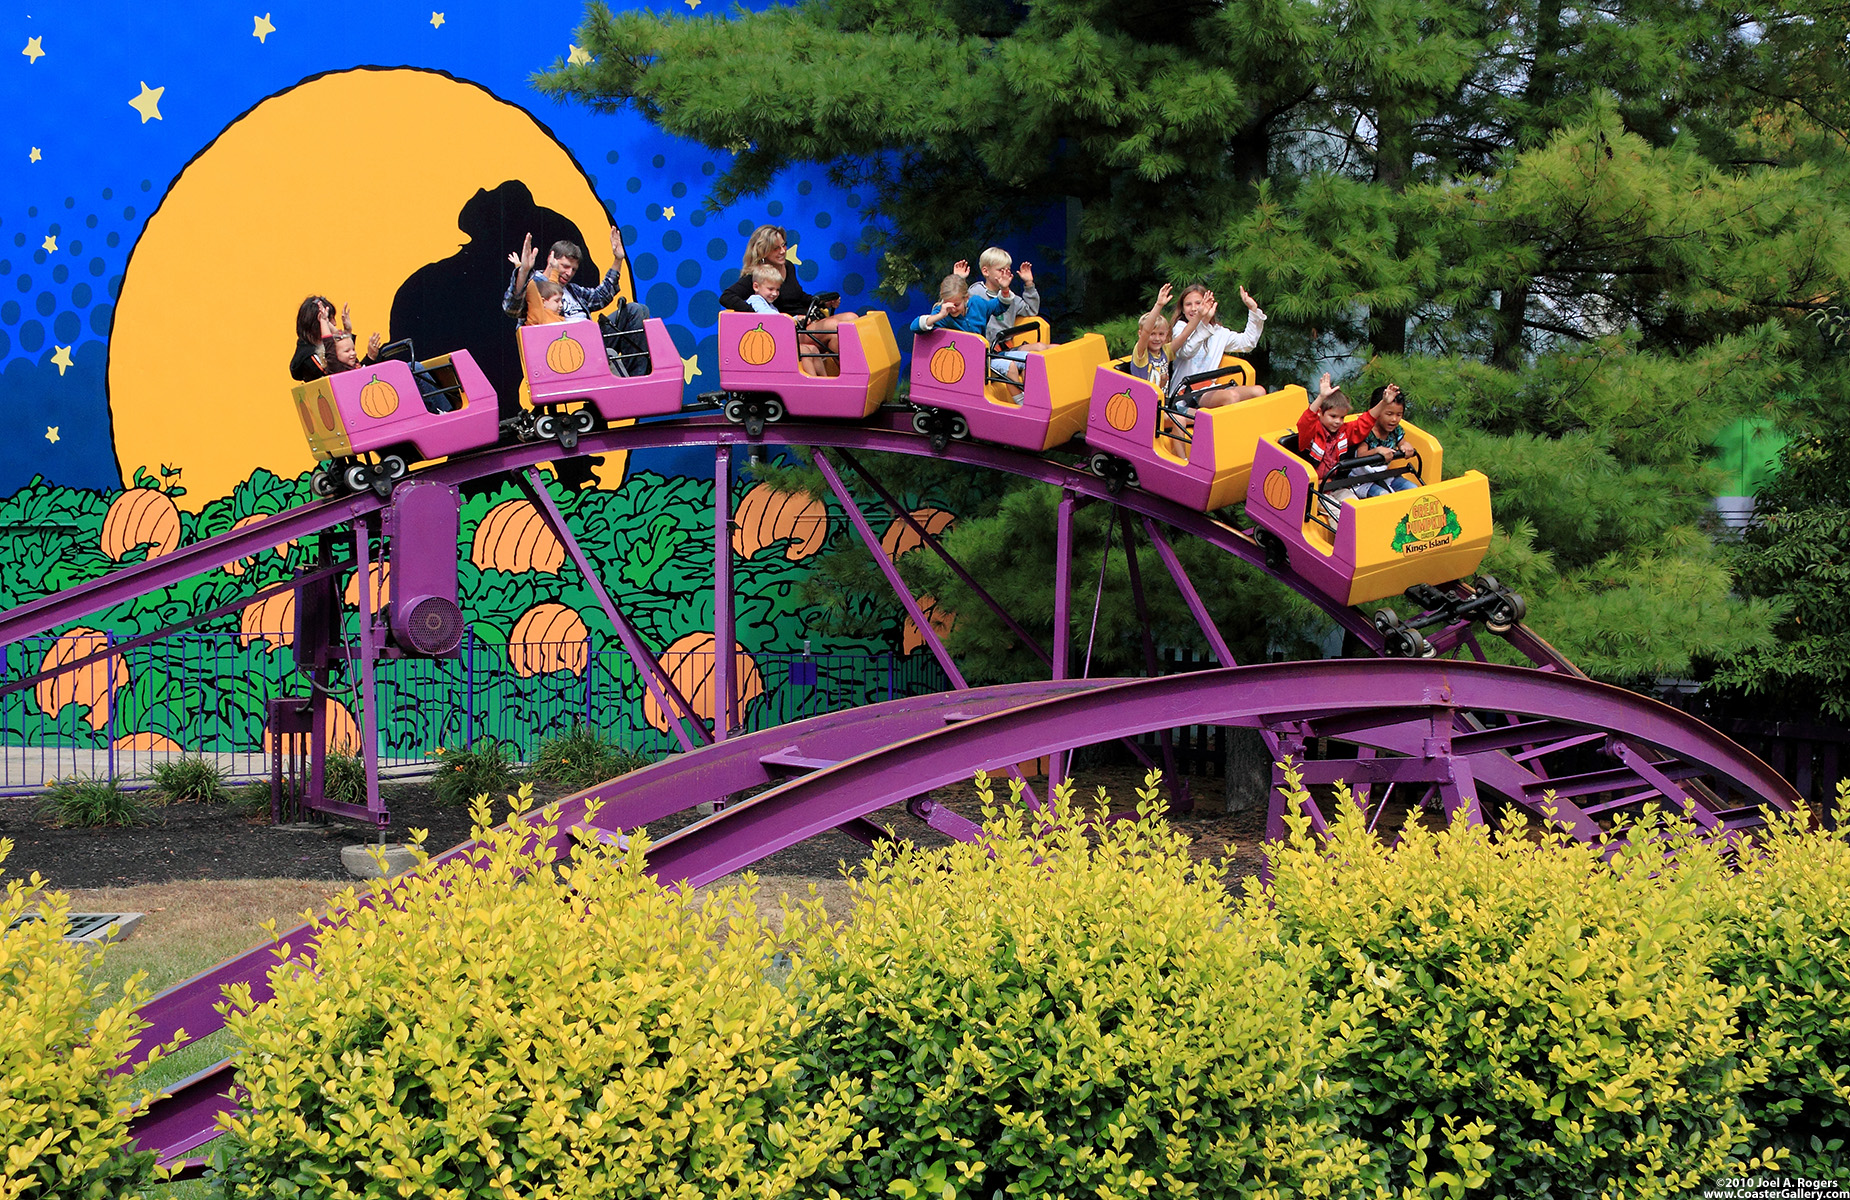 Great Pumpkin Snoopy roller coaster at Kings Island